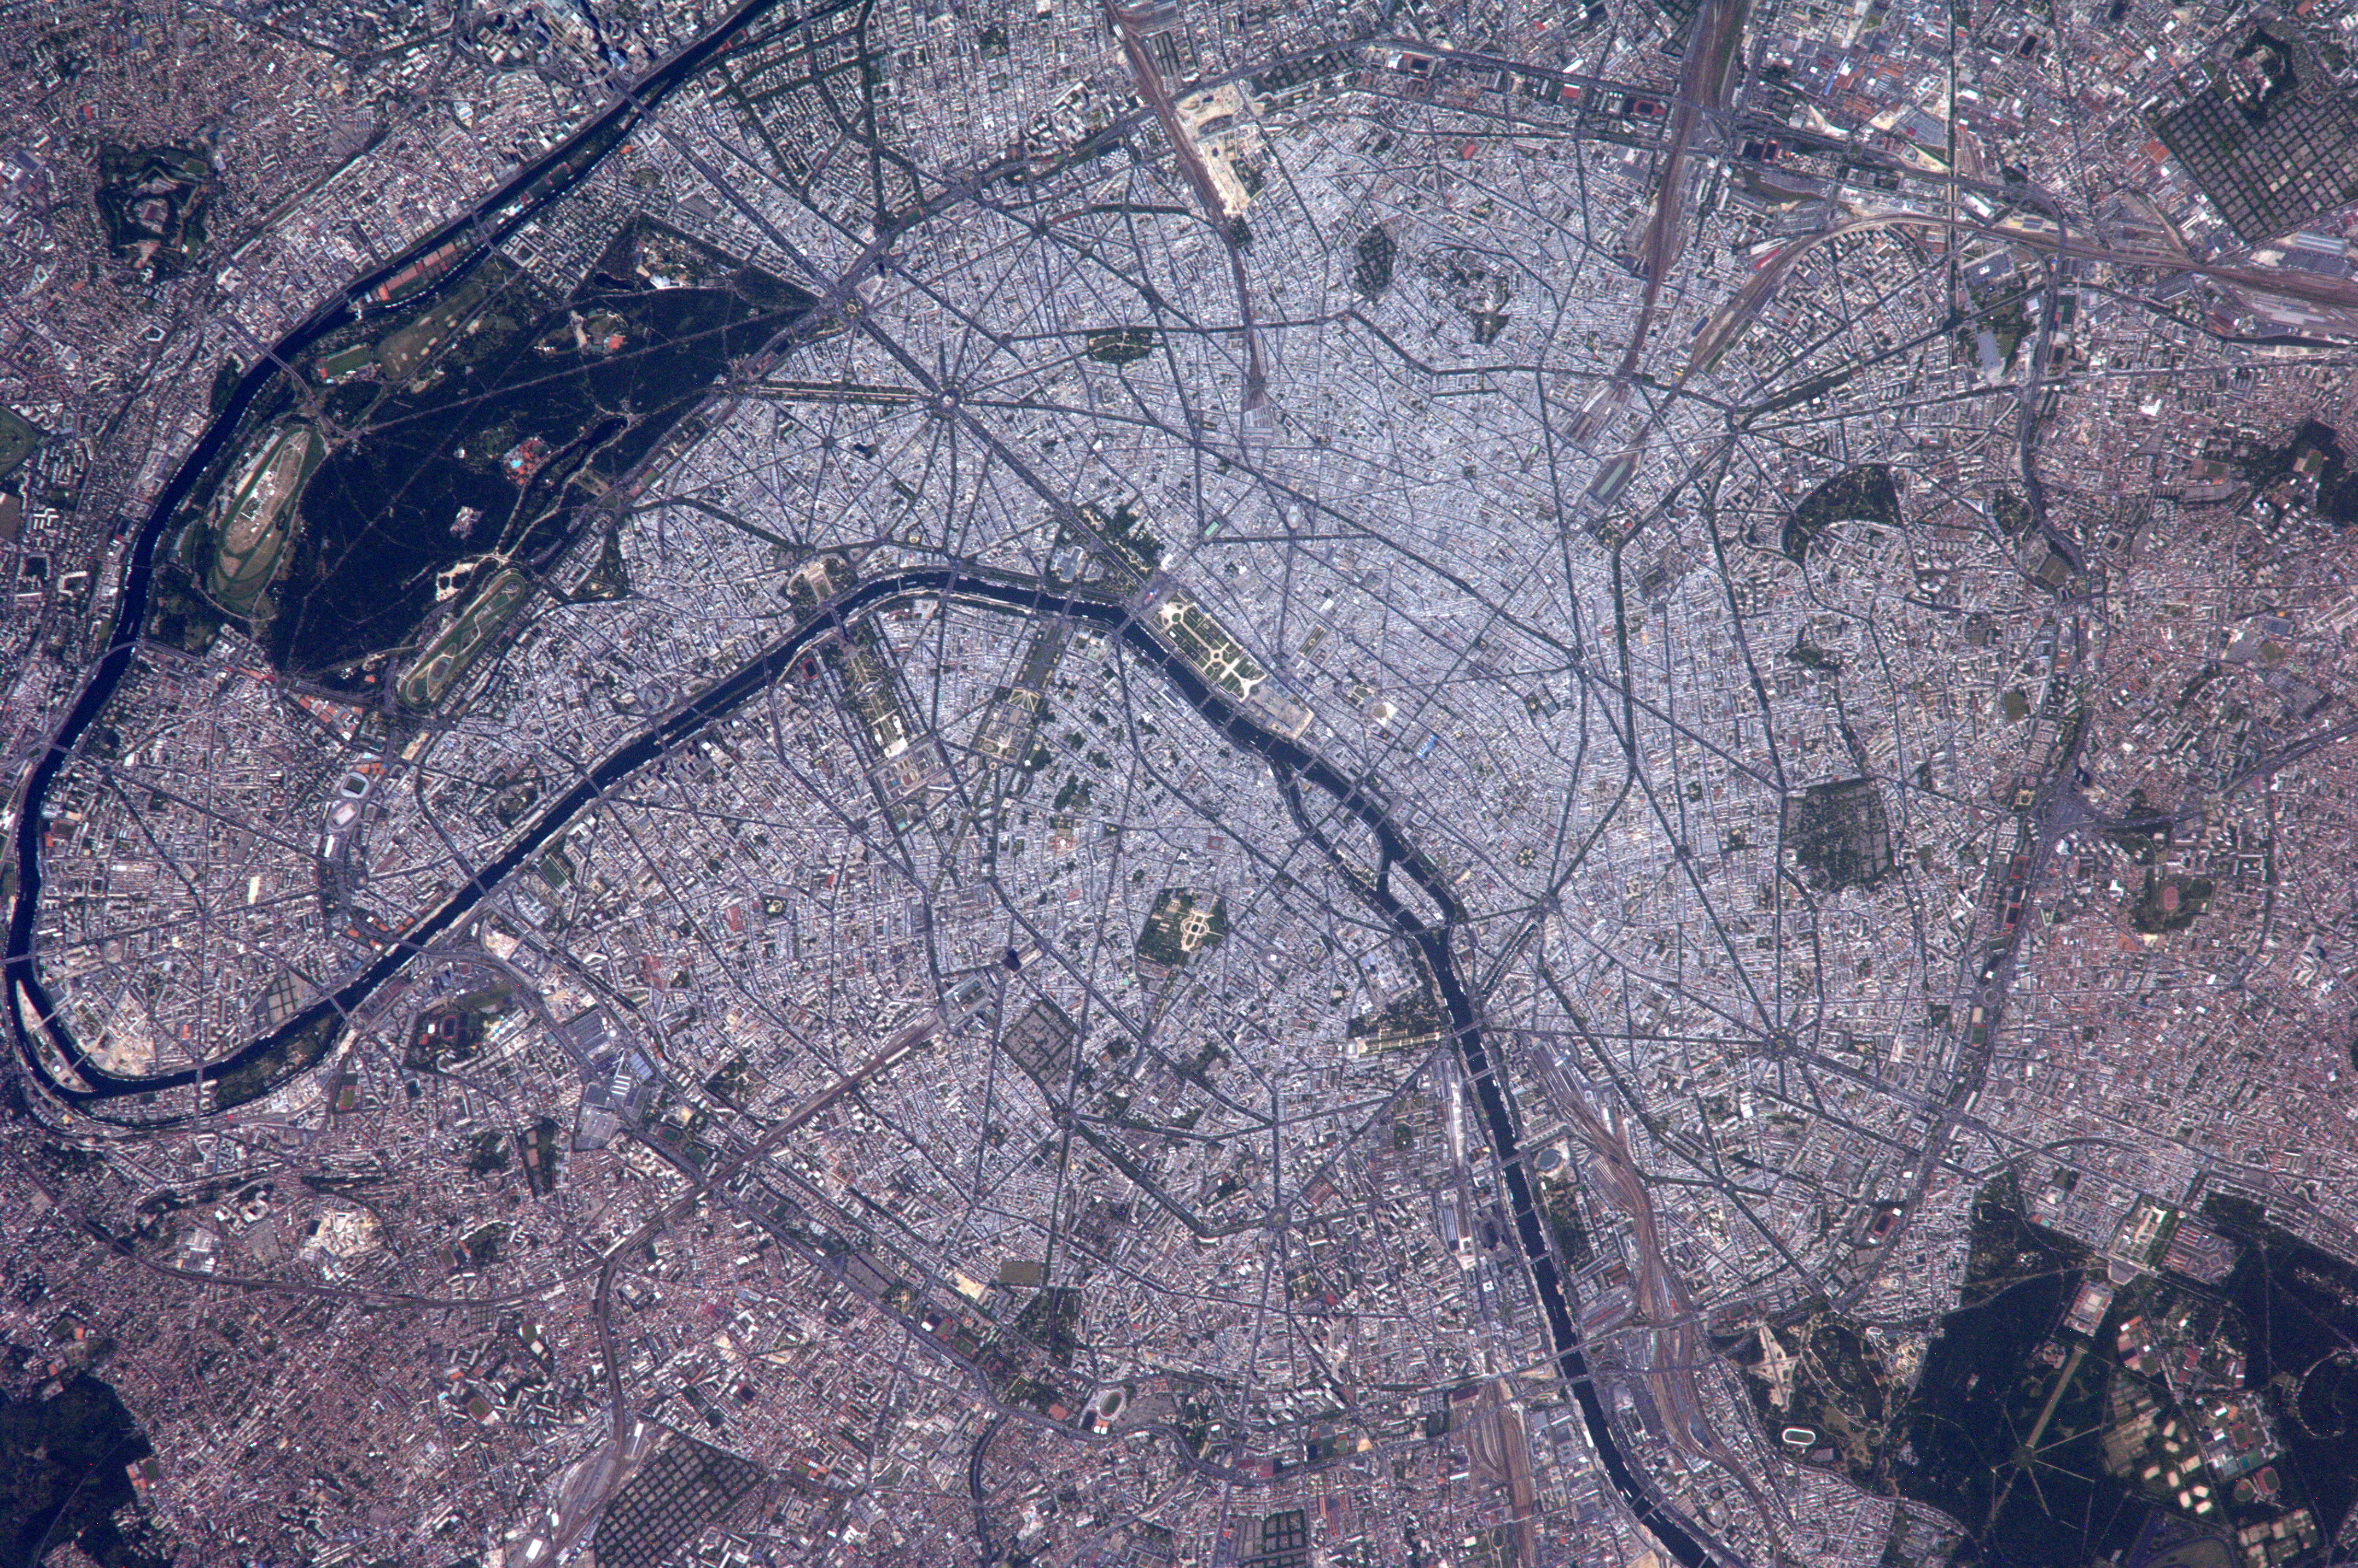 Space in Images - 2014 - 07 - Paris, France